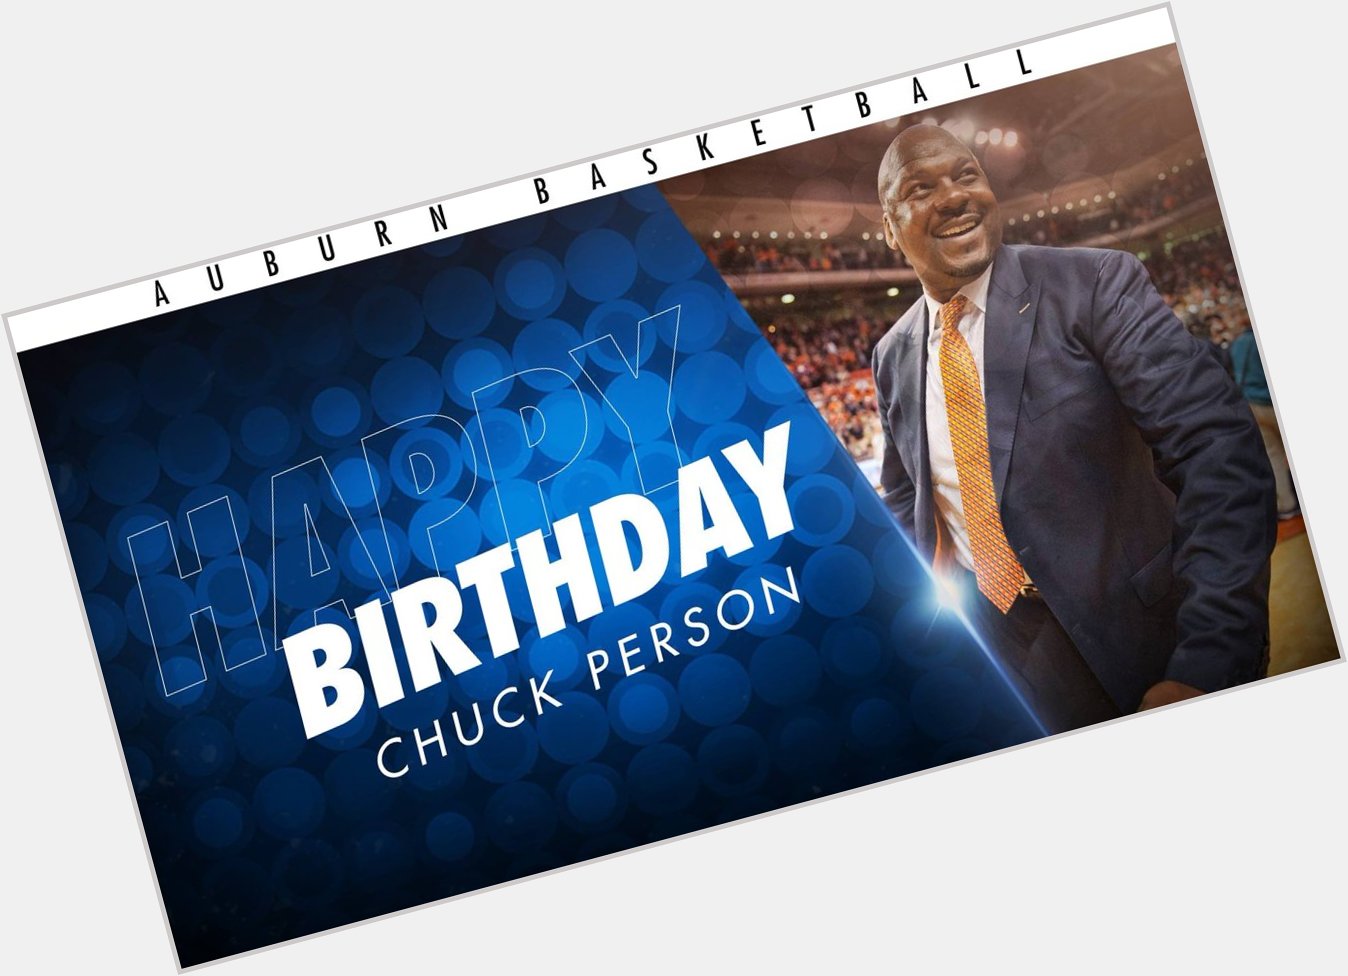 To wish The Rifleman, Auburn associate head coach Chuck Person, a Happy Birthday    